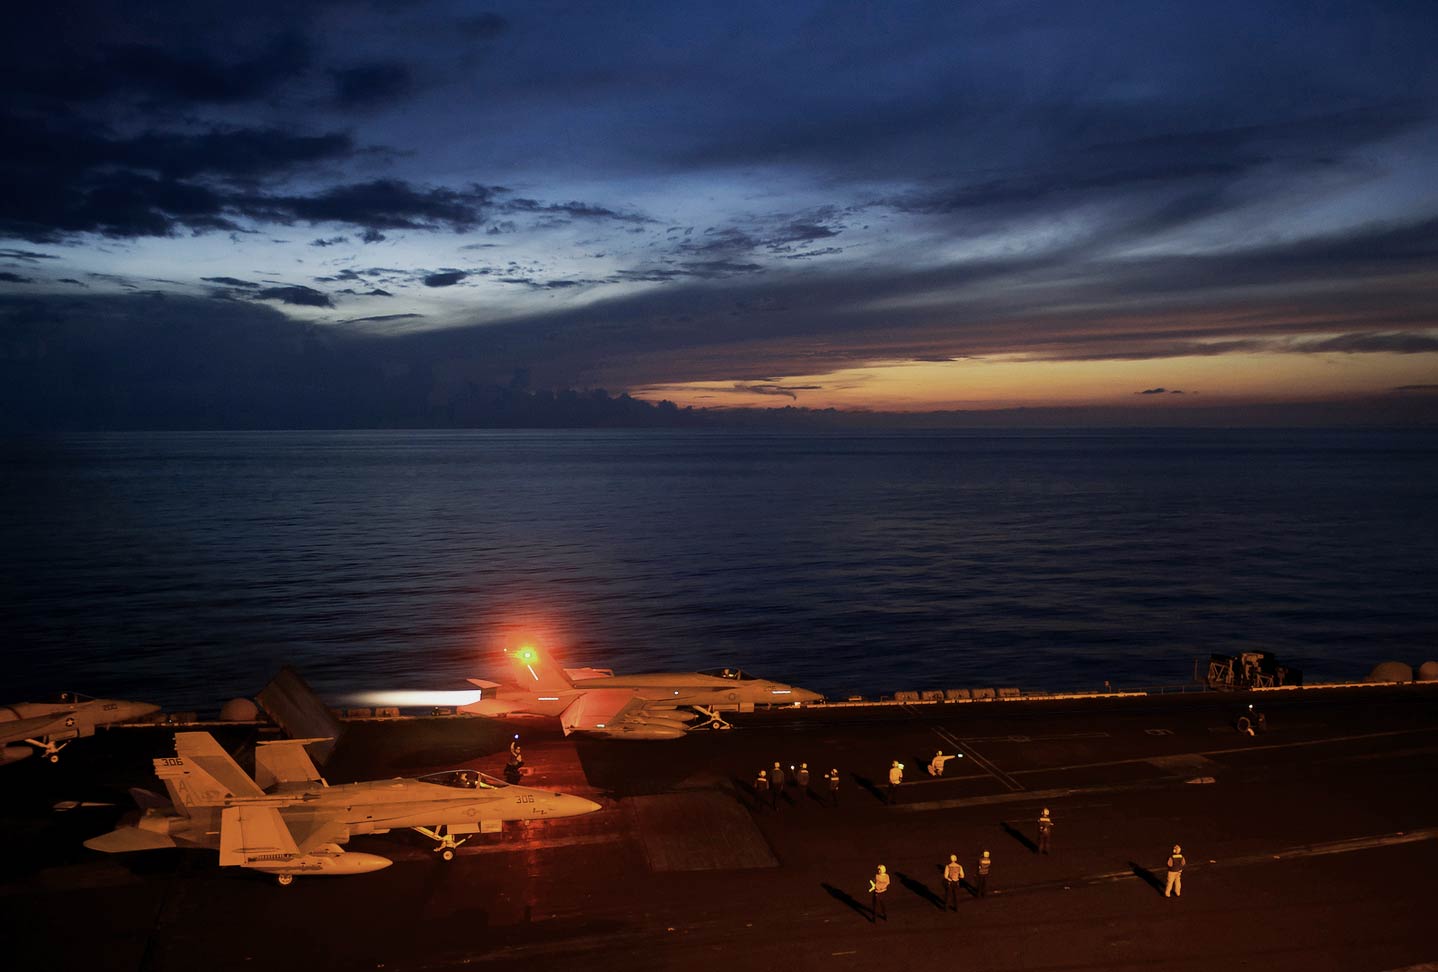 Military ship at night open sea